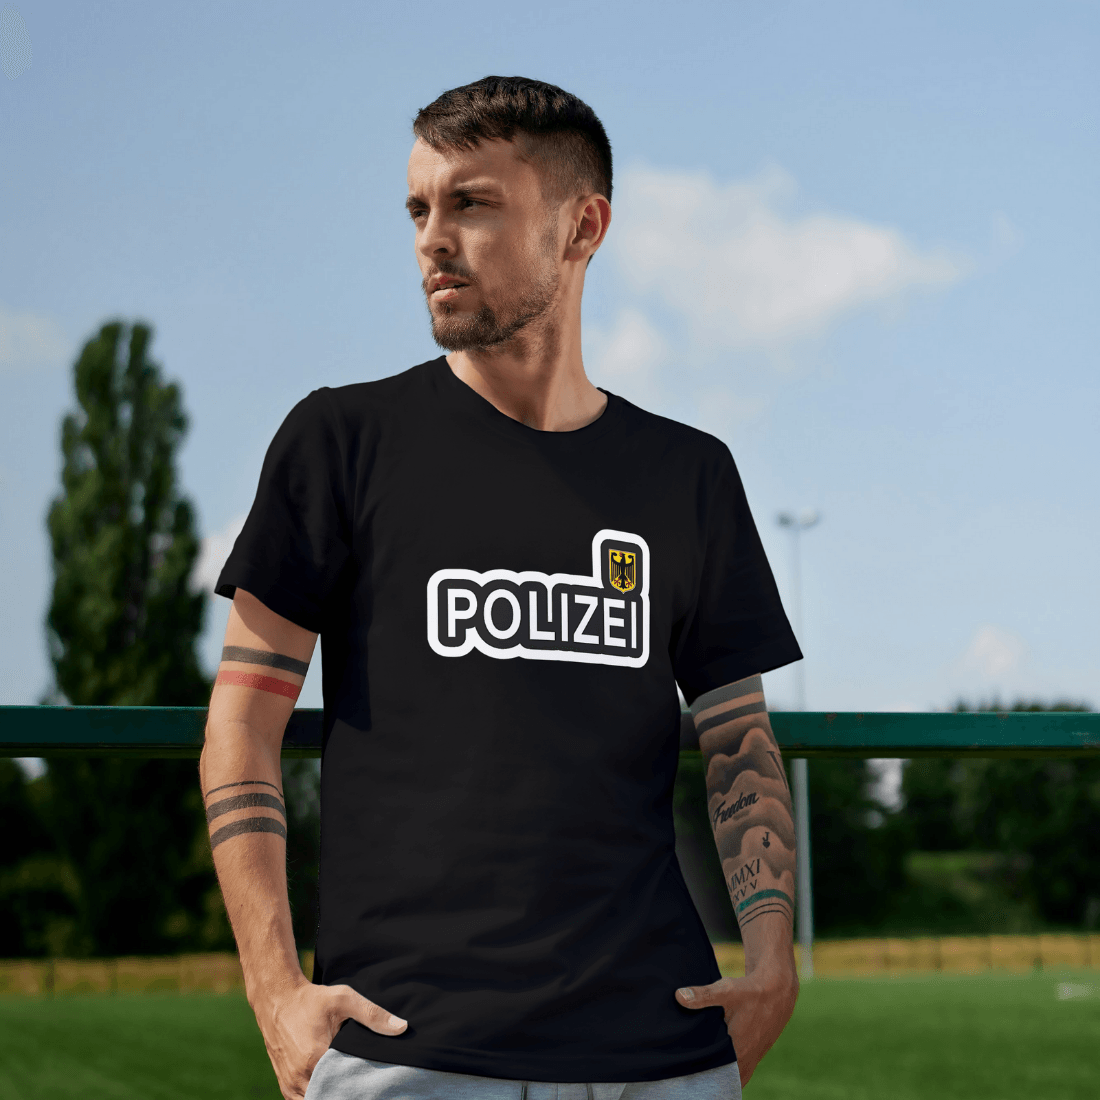 Polizie yazılı alman polis logosu baskılı tshirt byanatoli